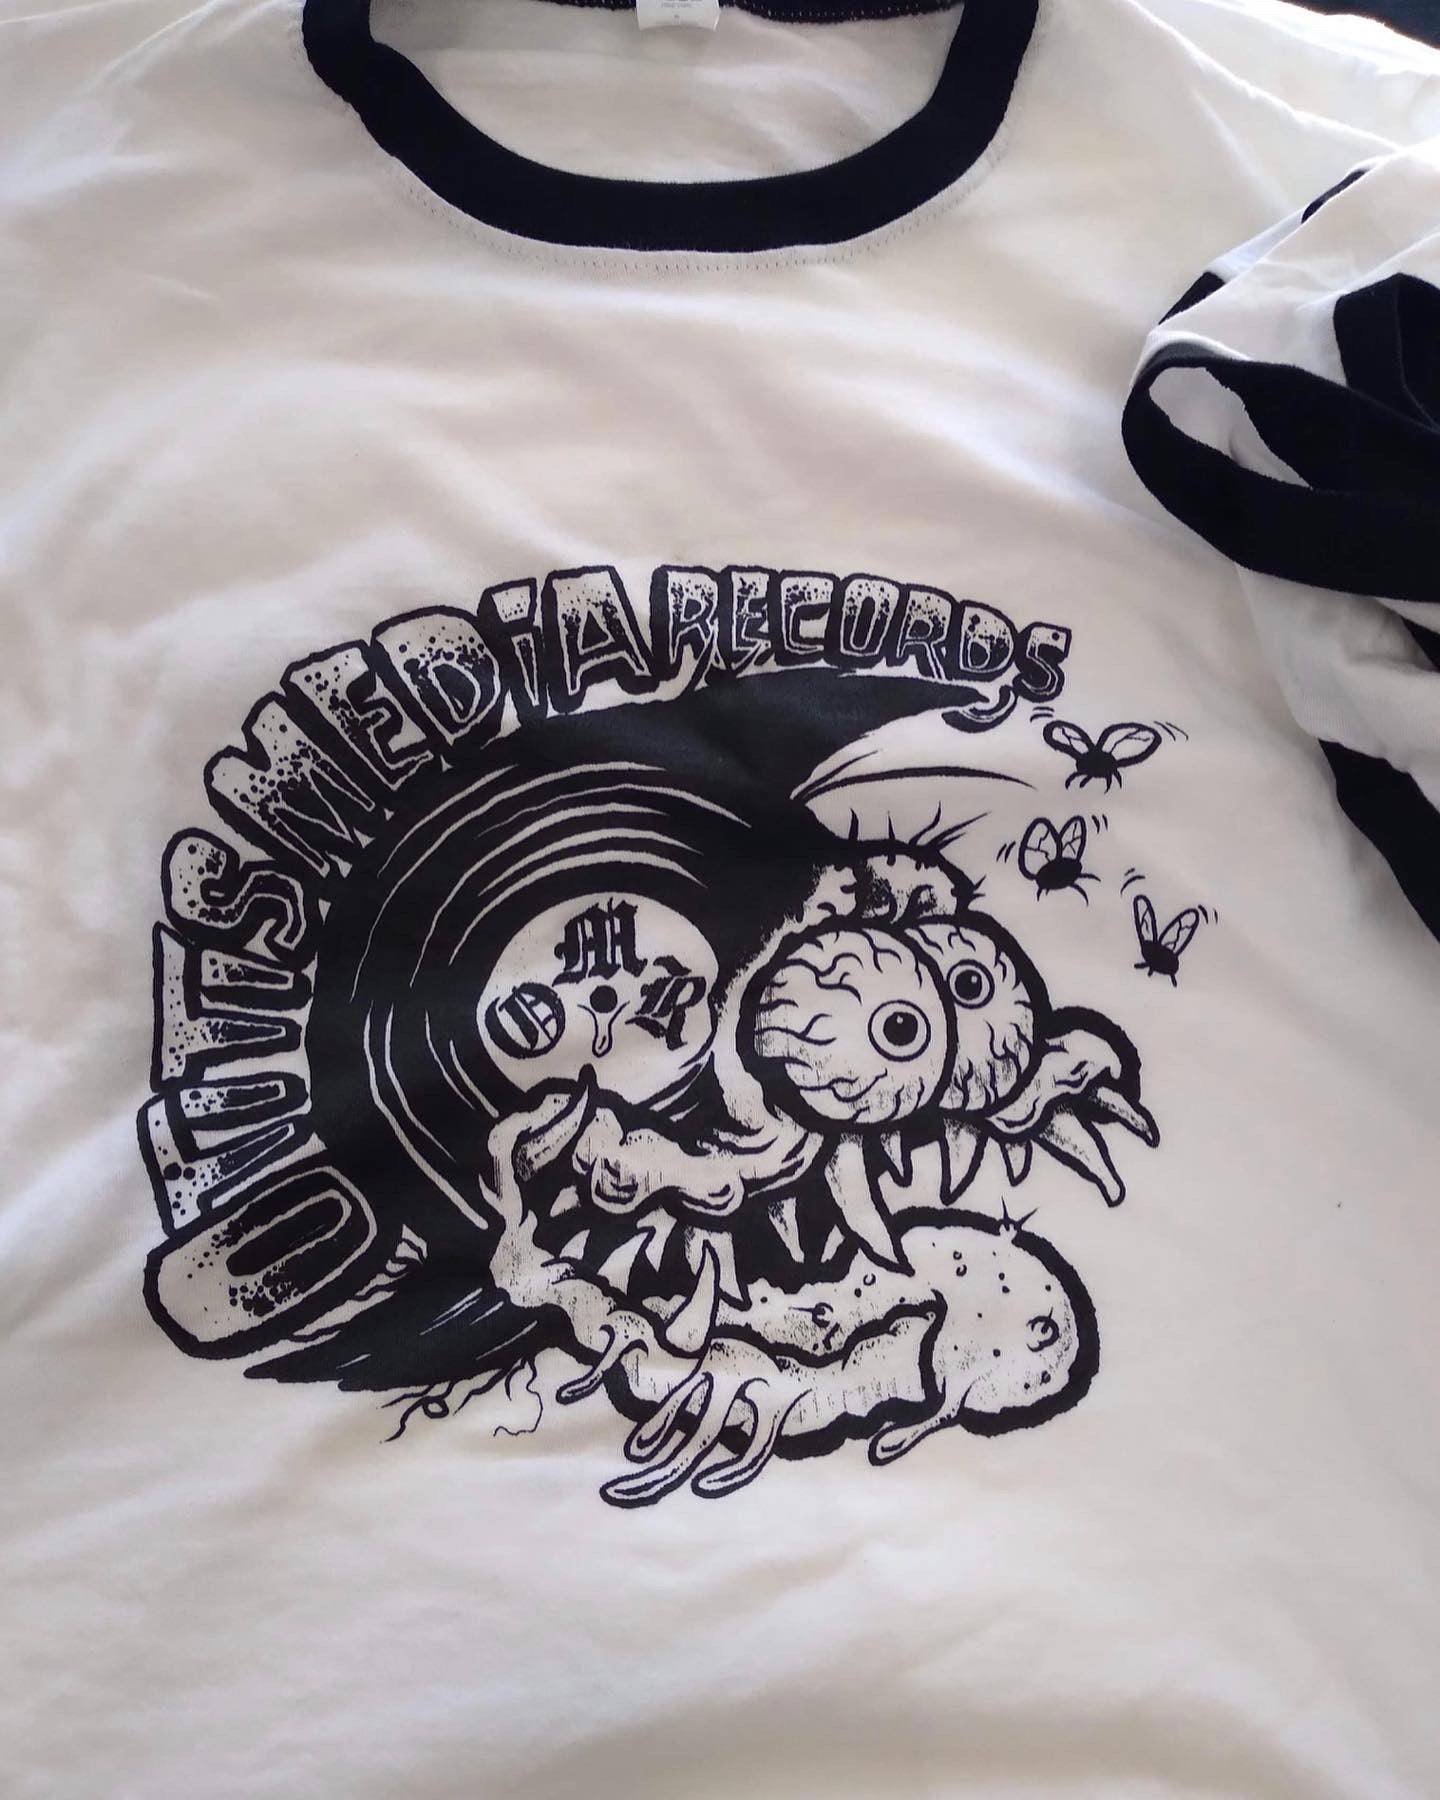 OMRMCH-009 “Hurricane Head Fink Guy” T-Shirt!